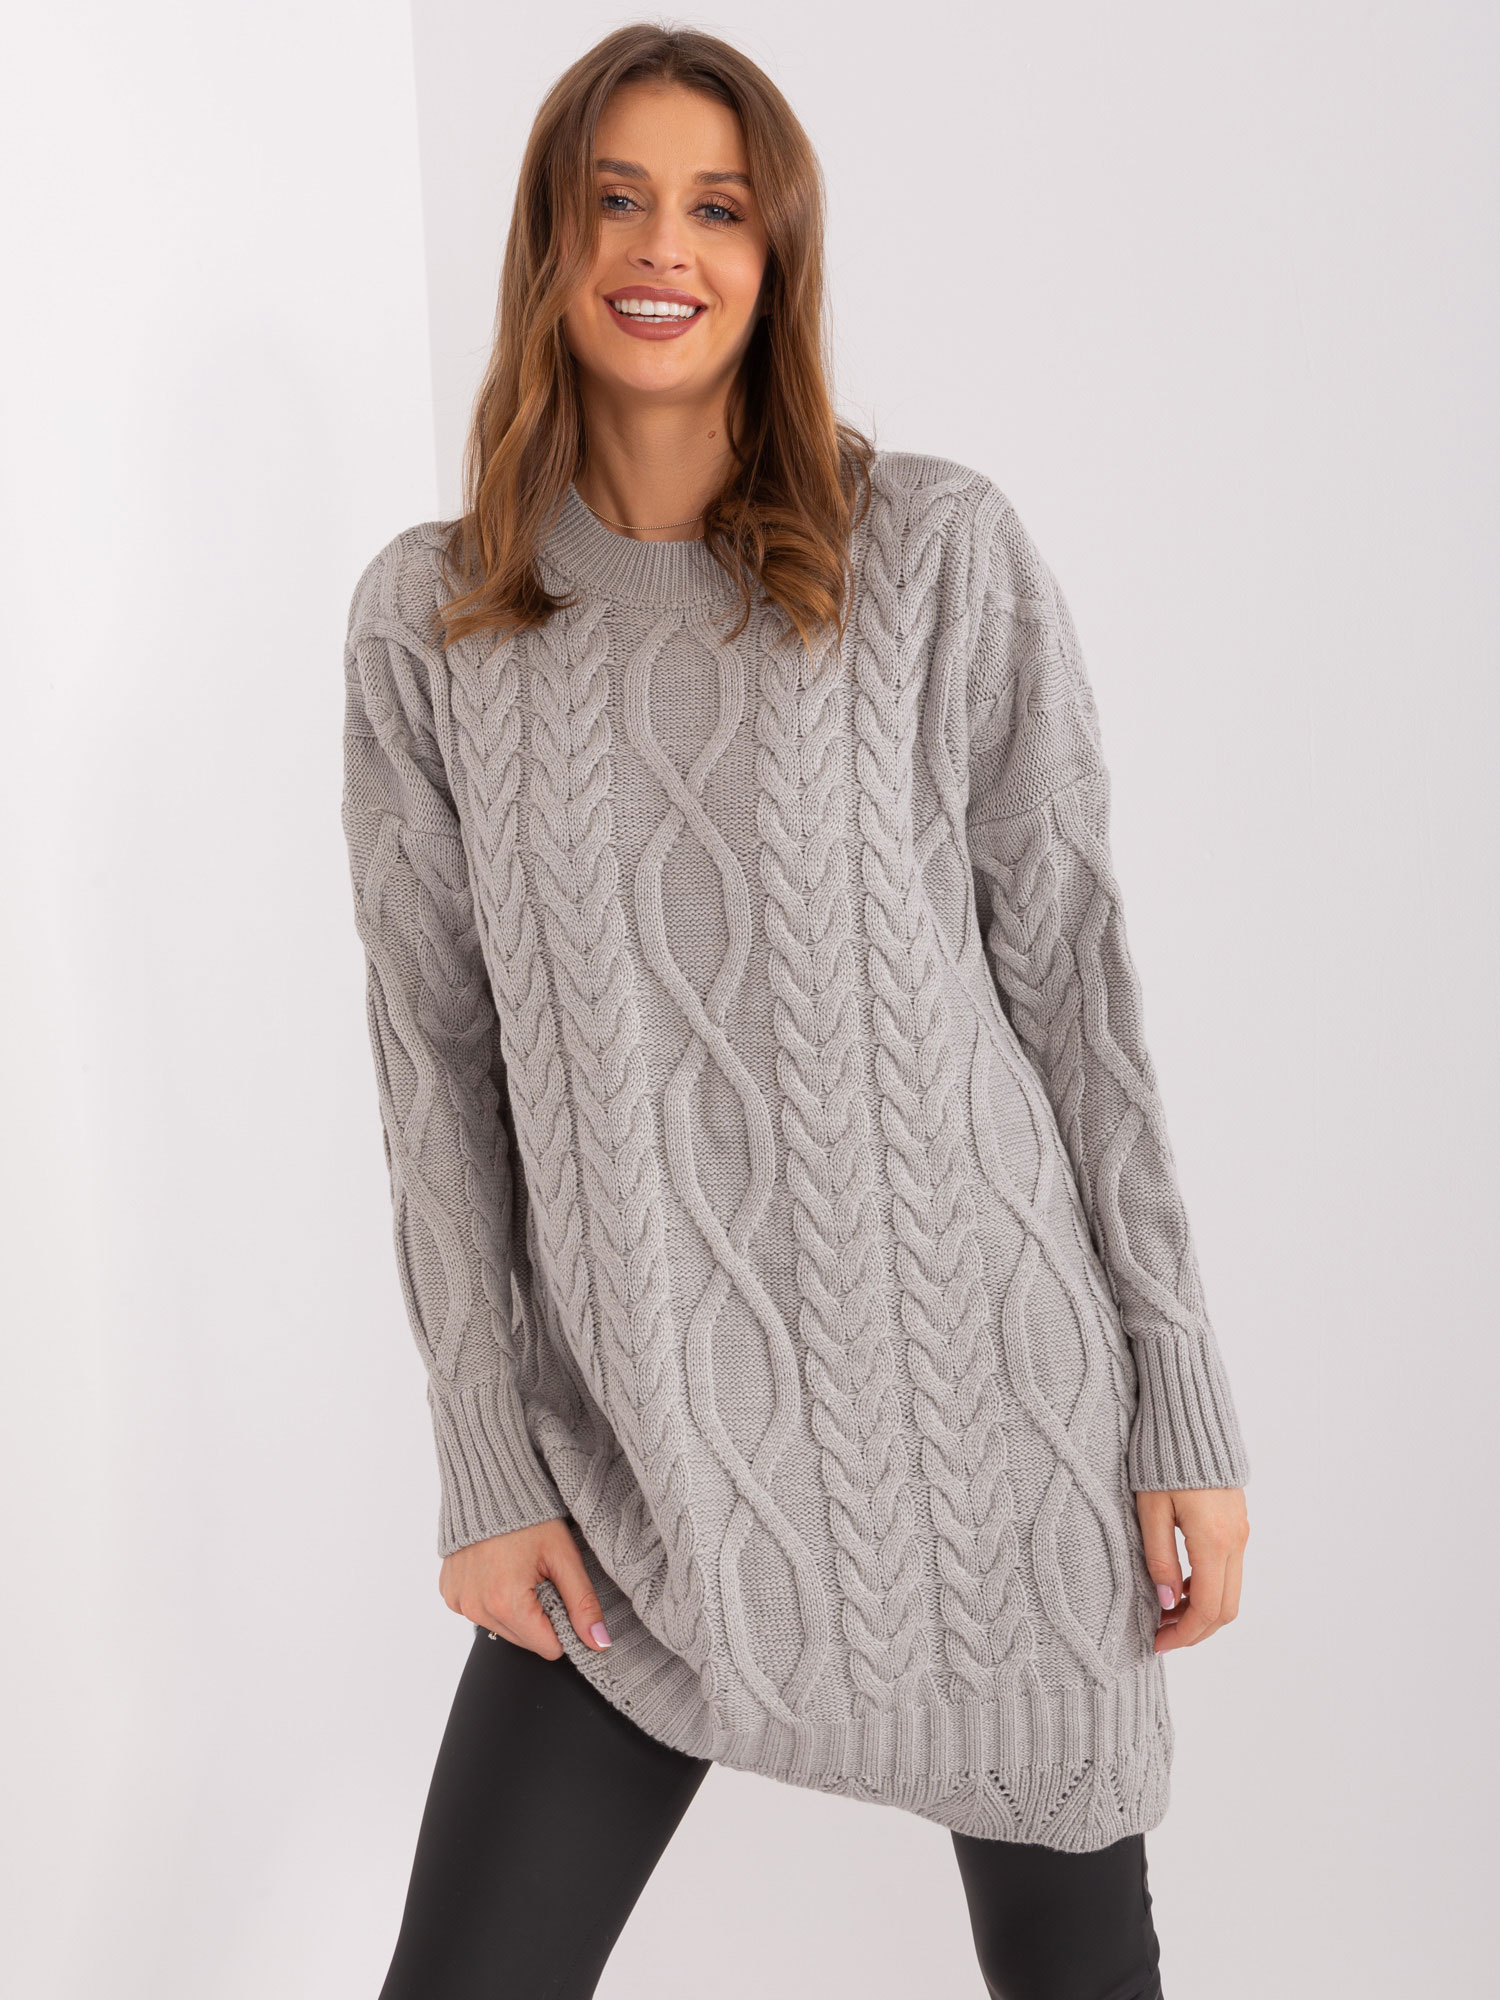 Šedé svetrové šaty s copánkovým vzorem LC-SK-8012-2.64P-grey Velikost: ONE SIZE